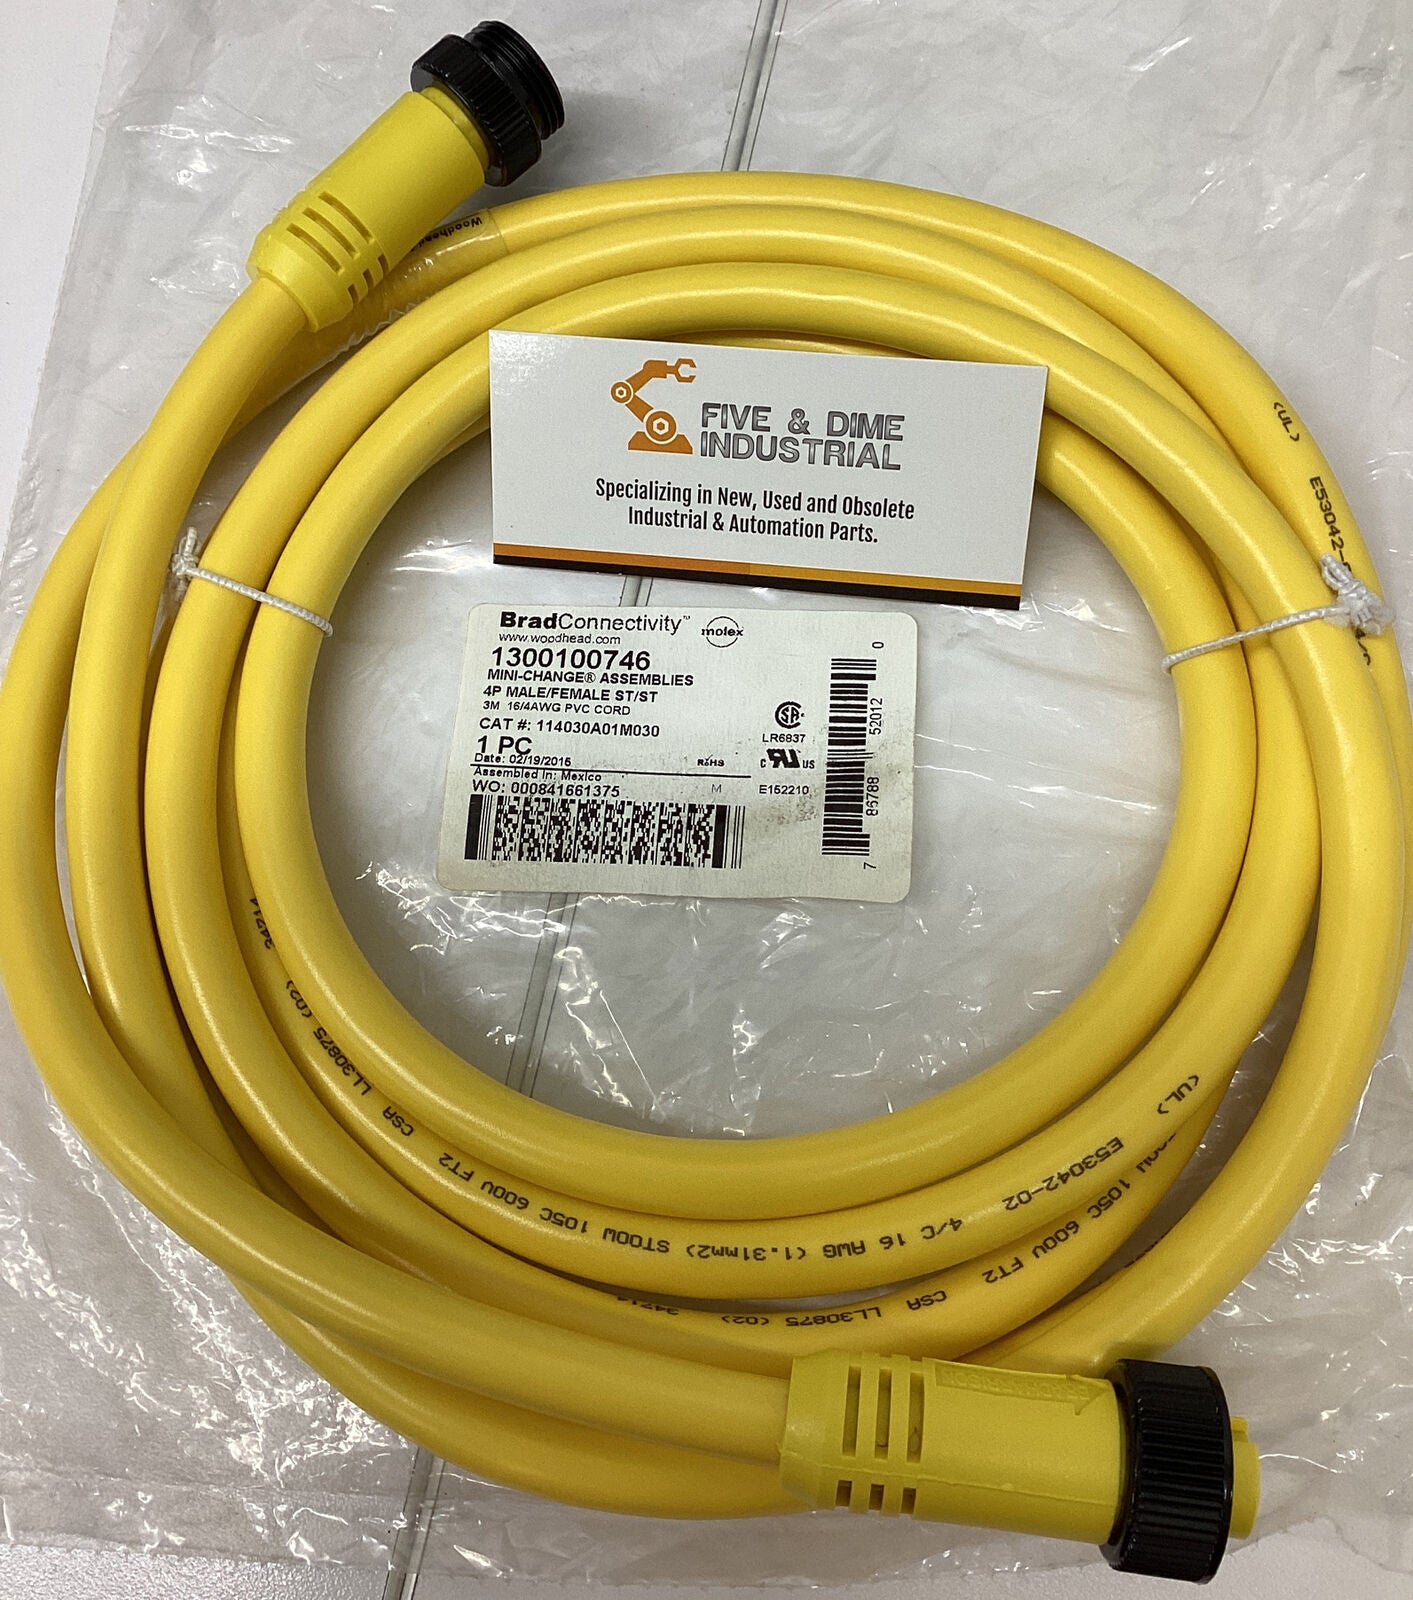 Brad WoodHead 1300100746/ 114030A01M030 4P mini Change Cable 3M (CBL121)